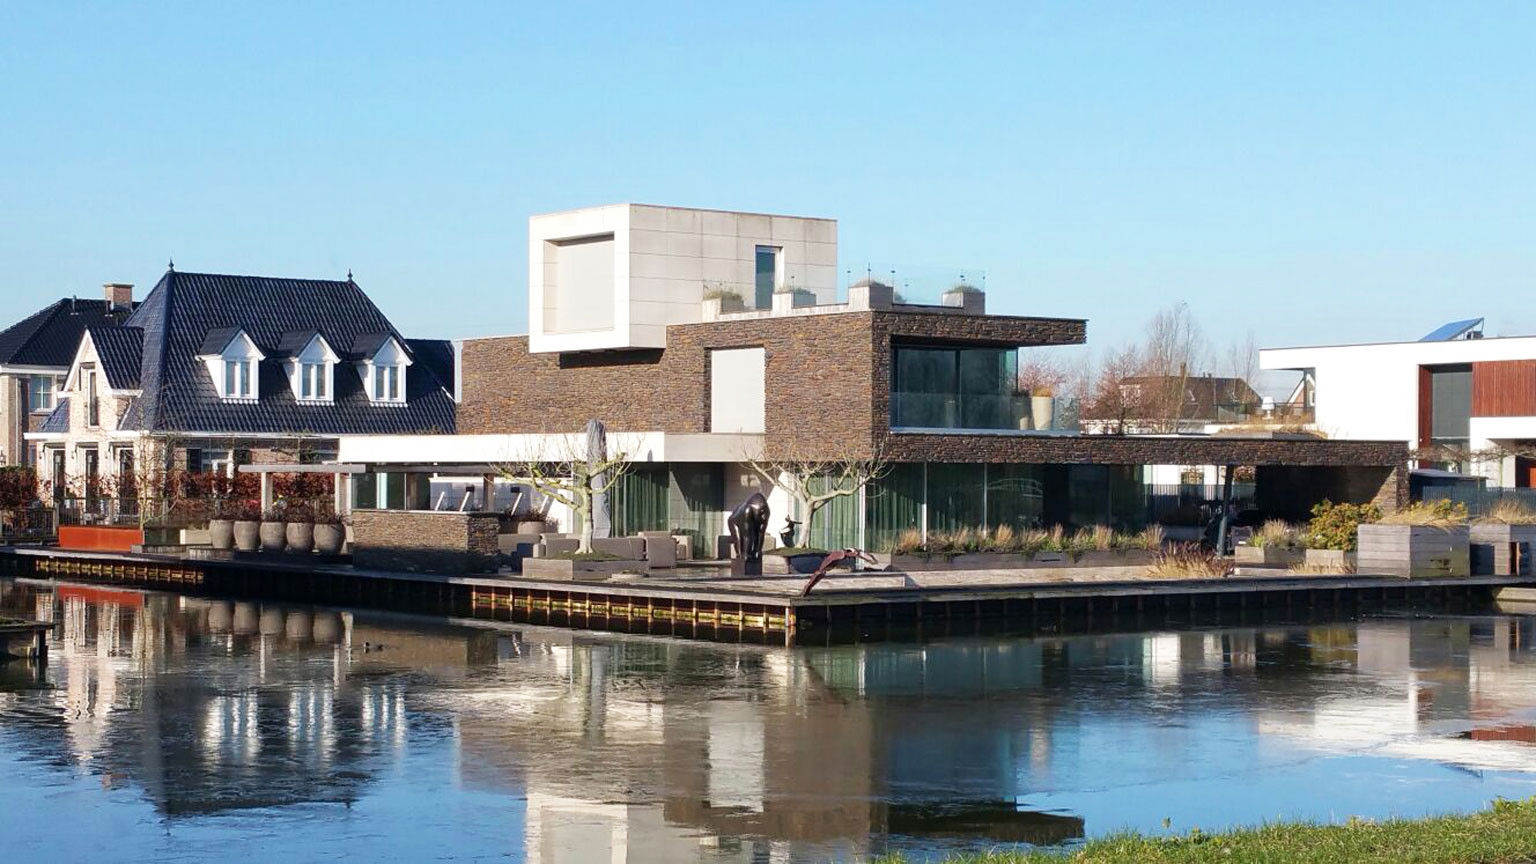 Villa nesselande rotterdam 5 wonen projecten vsap architects